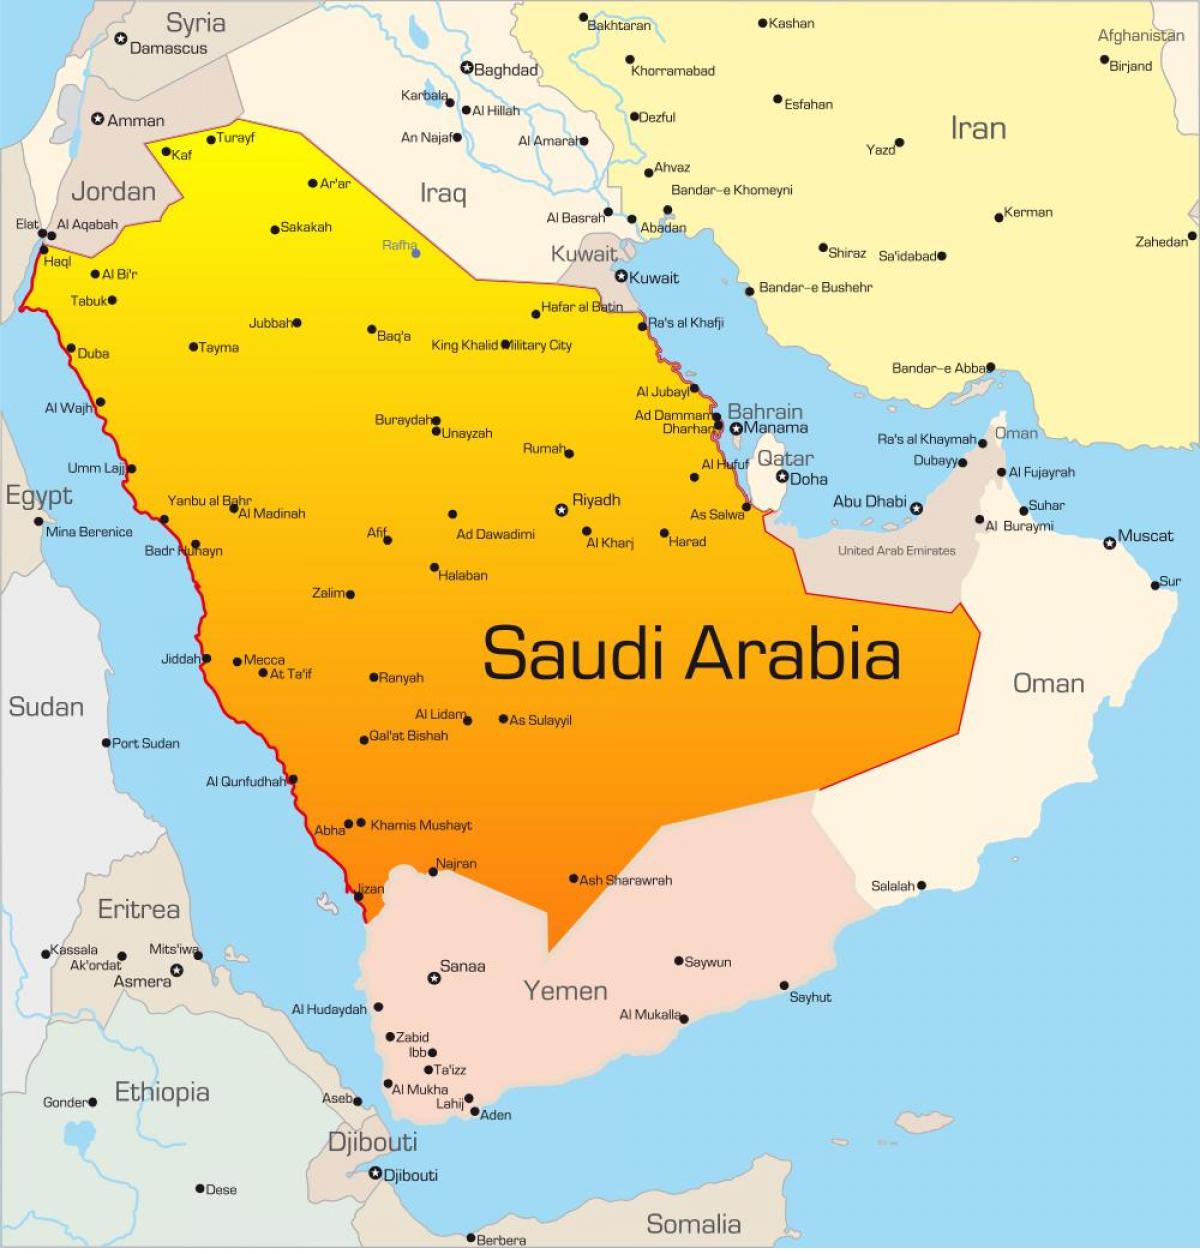 Mekka i saudiarabien karta